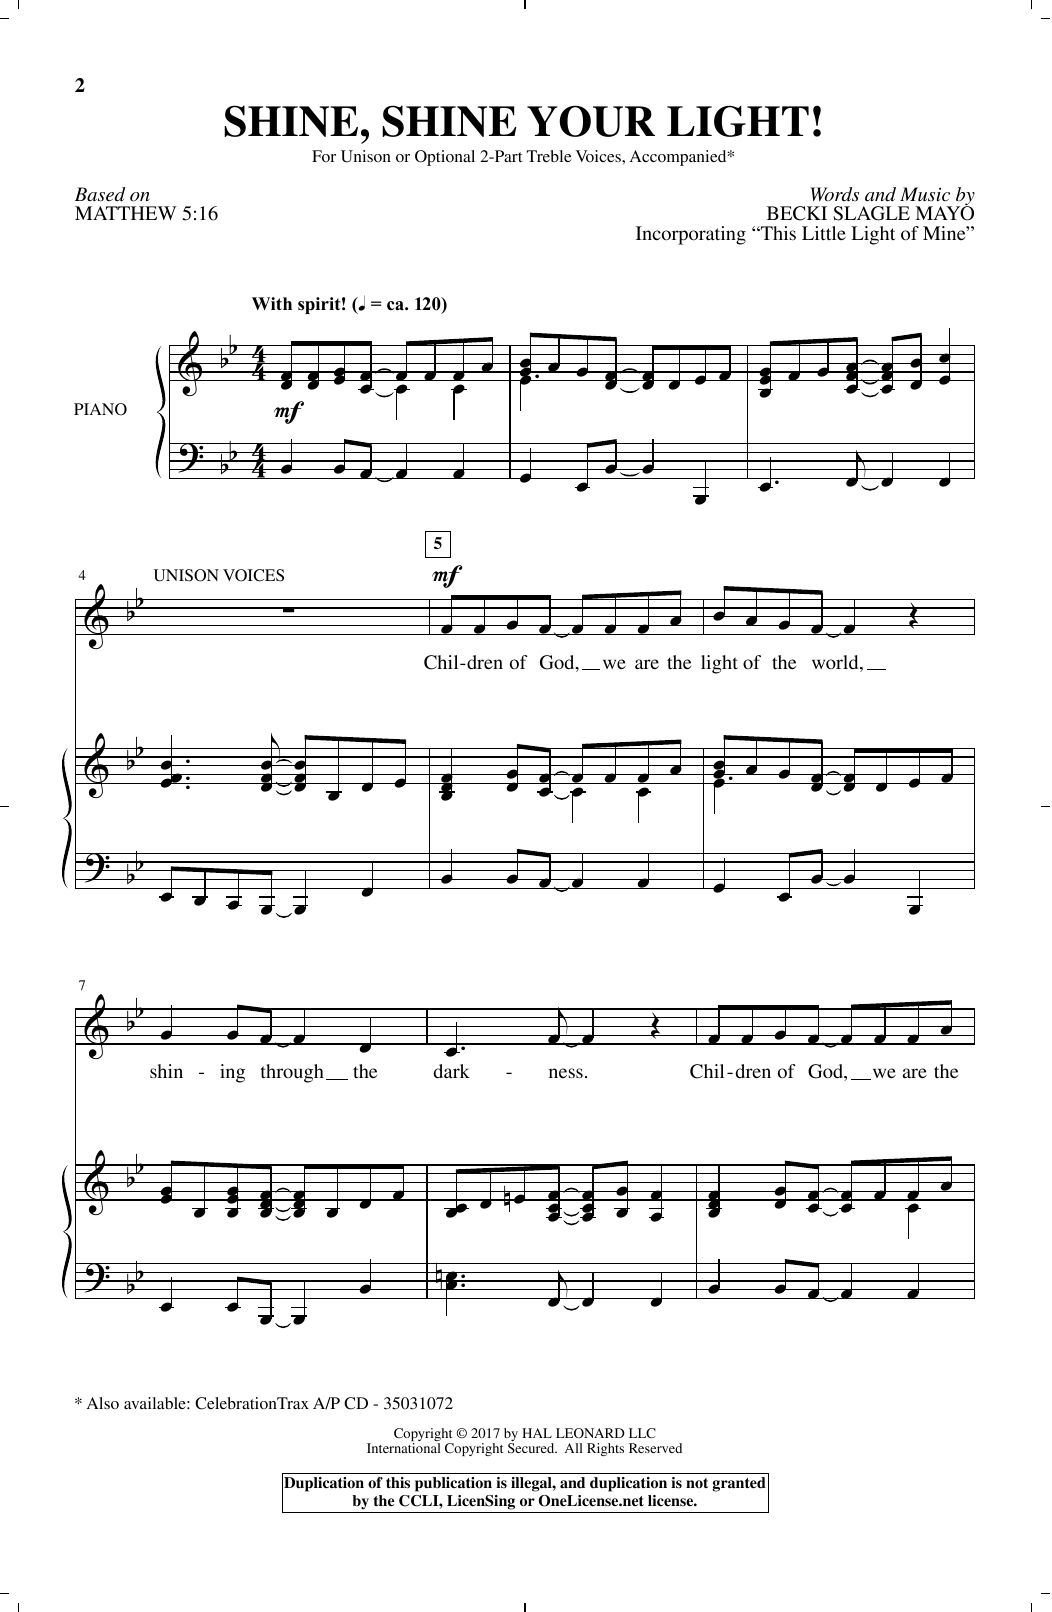 Becki Slagle Mayo Shine, Shine Your Light! Sheet Music Notes & Chords for Choral - Download or Print PDF